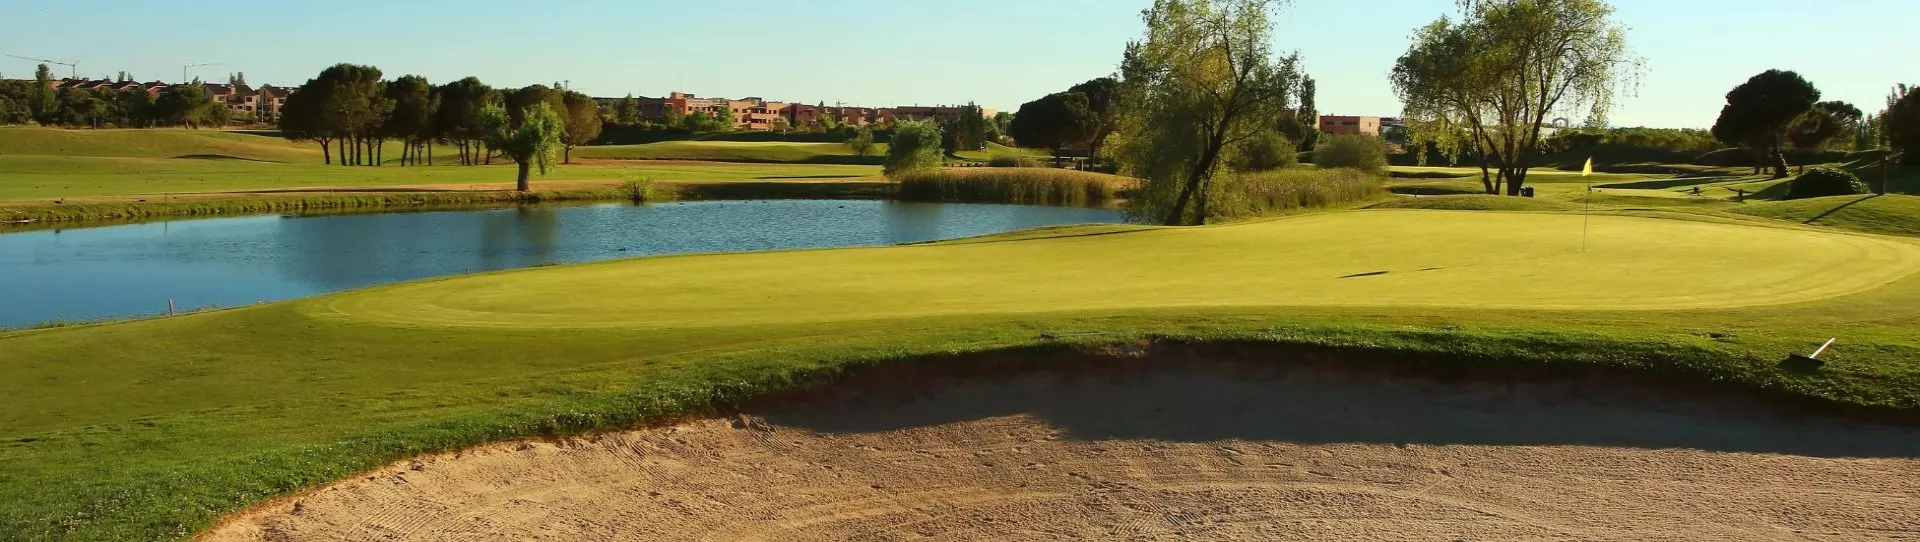 Spain golf courses - La Dehesa Golf Course - Photo 1